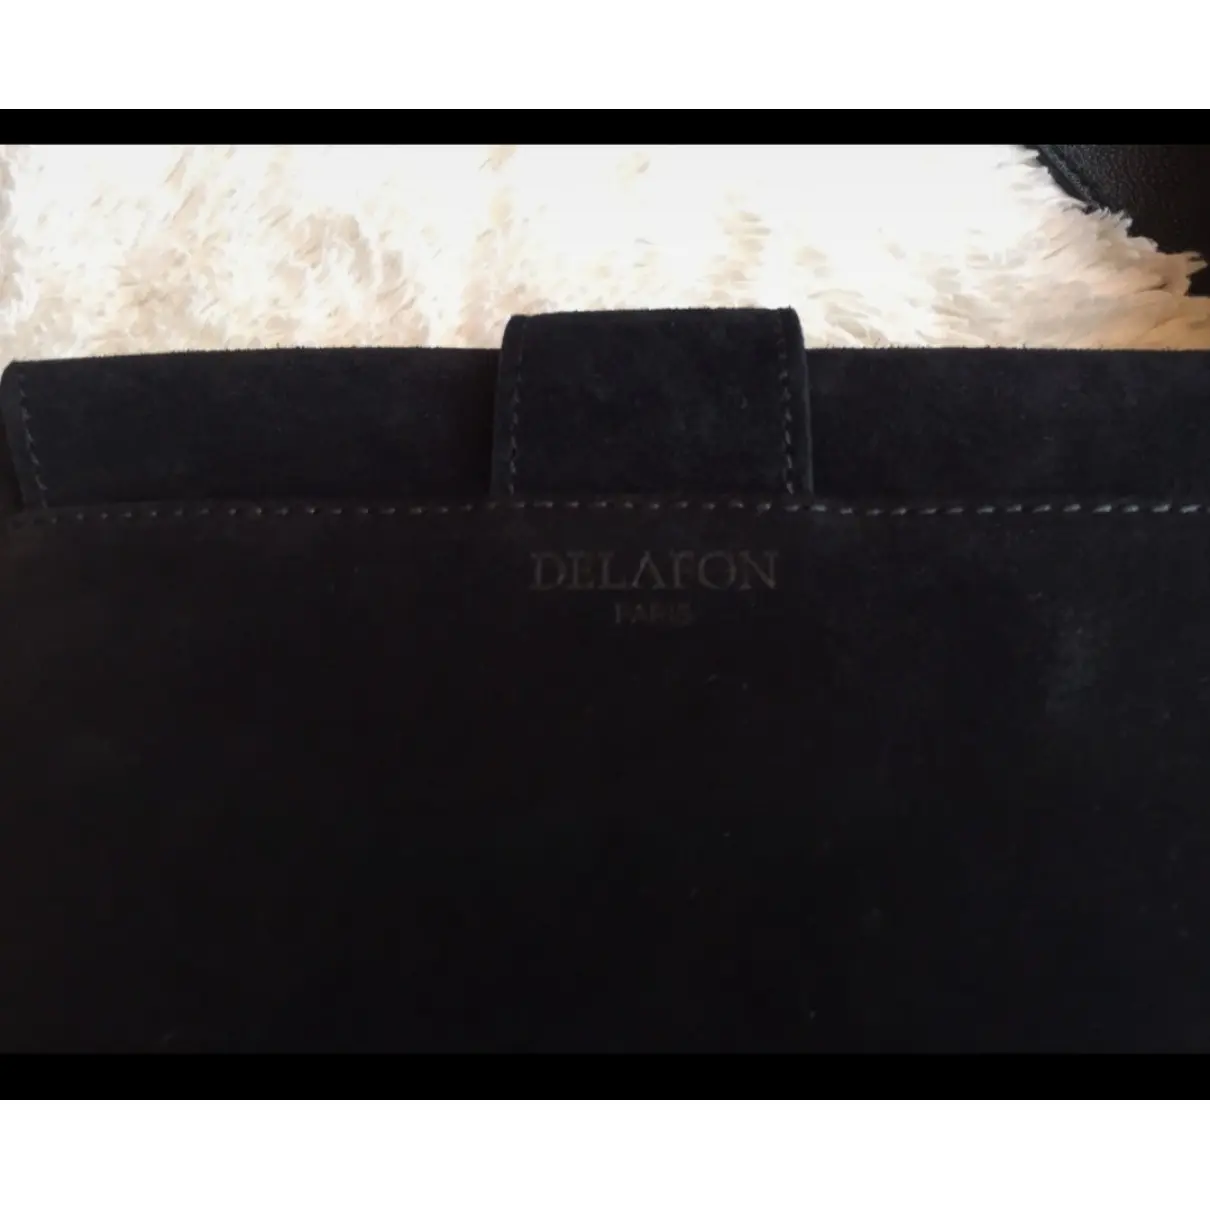 Delphine Delafon Handbag for sale